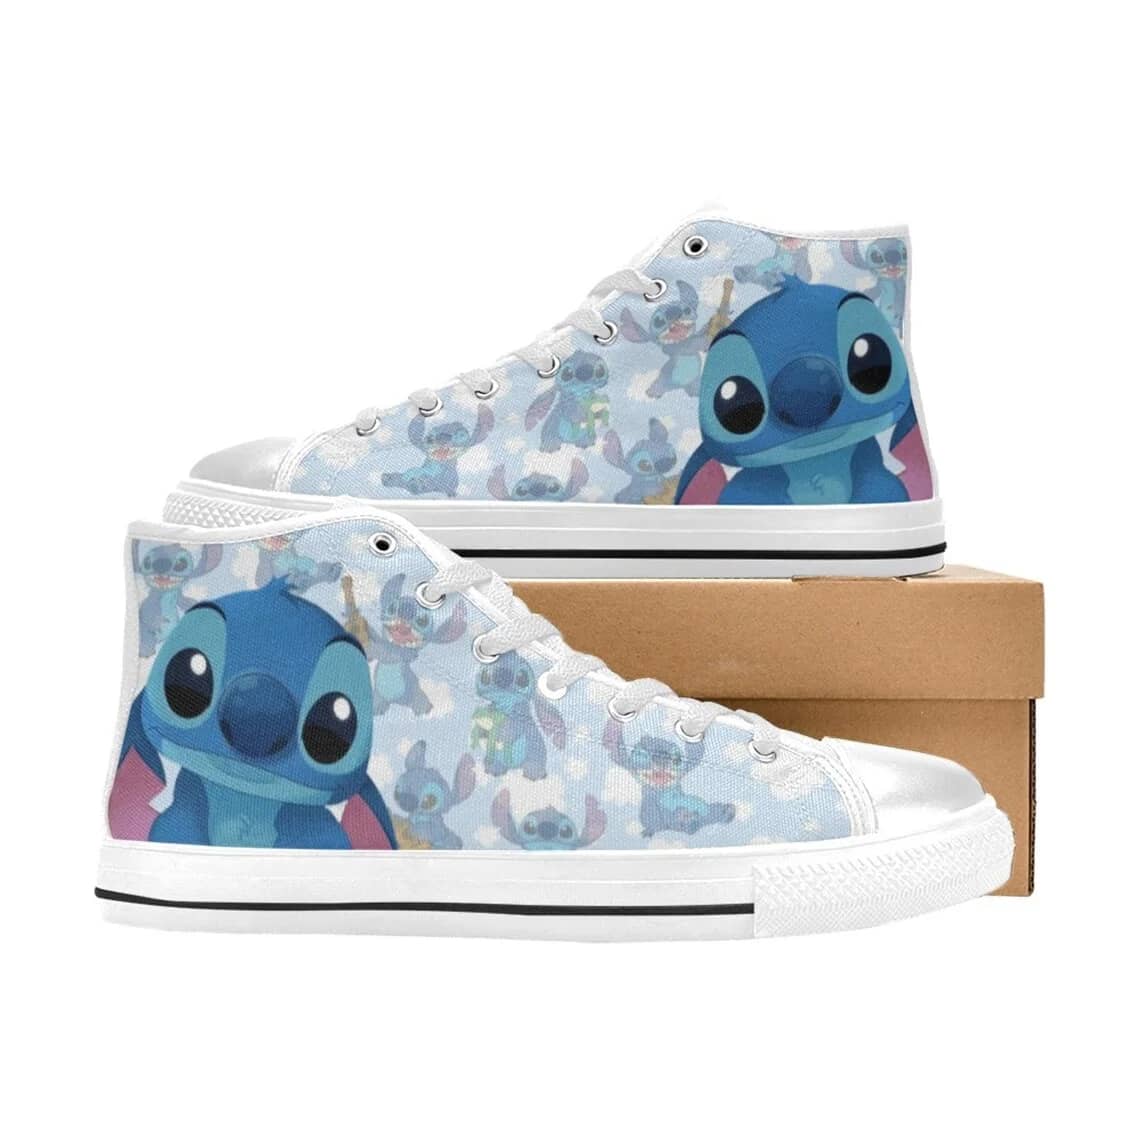 Stitch Style 1 Amazon Custom Disney High Top Shoes